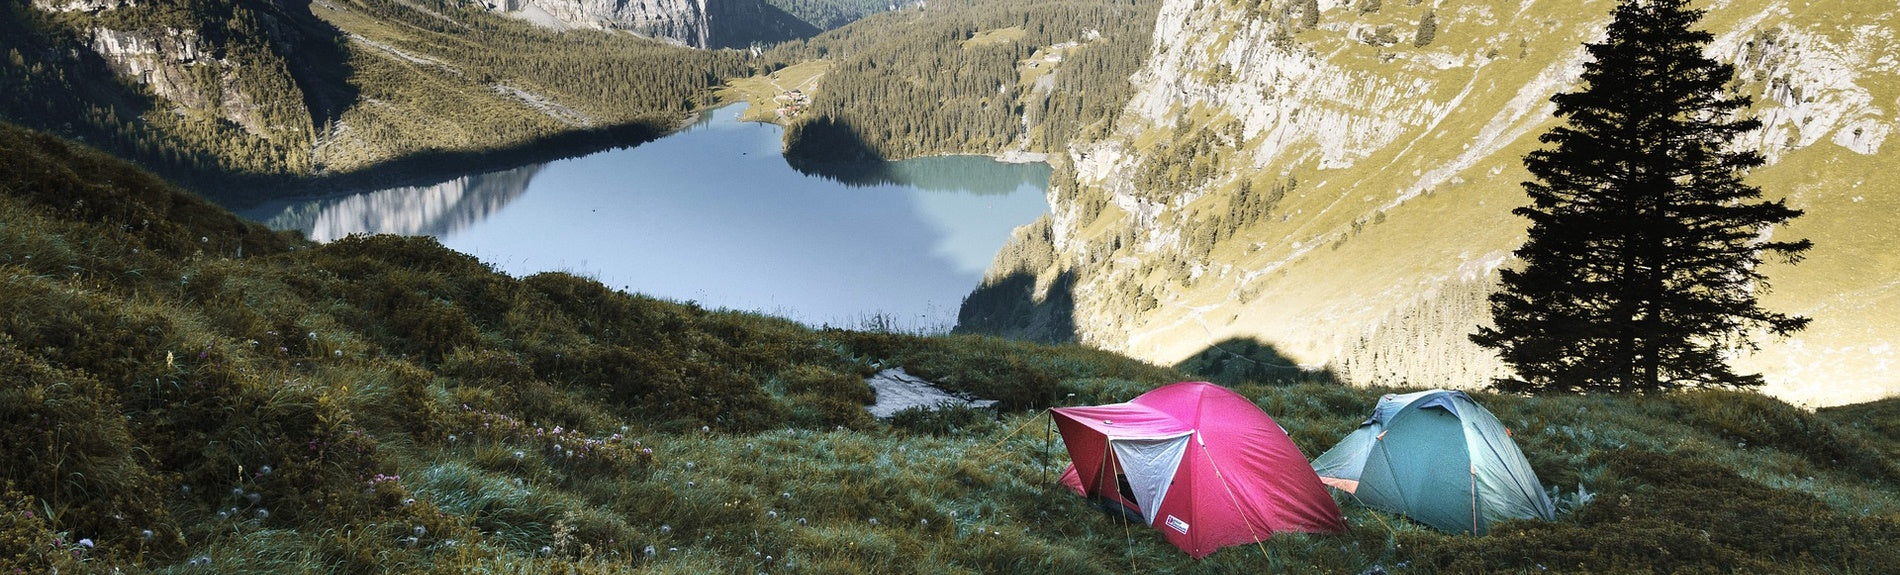 waterproof dry bag - ugo - camping